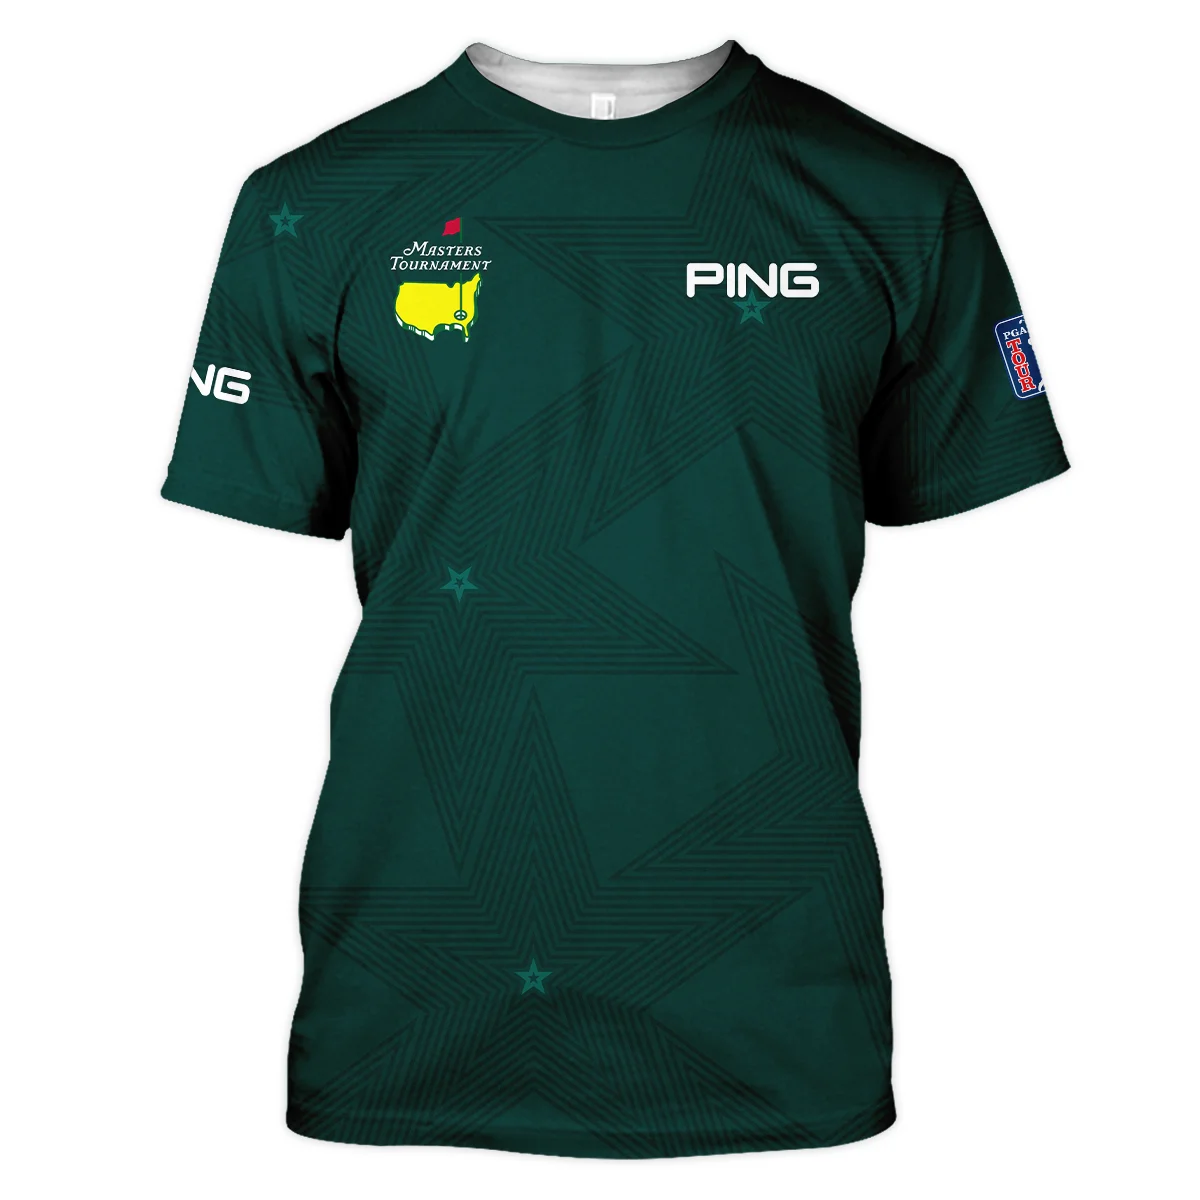 Golf Masters Tournament Ping Hoodie Shirt Stars Dark Green Golf Sports All Over Print Hoodie Shirt